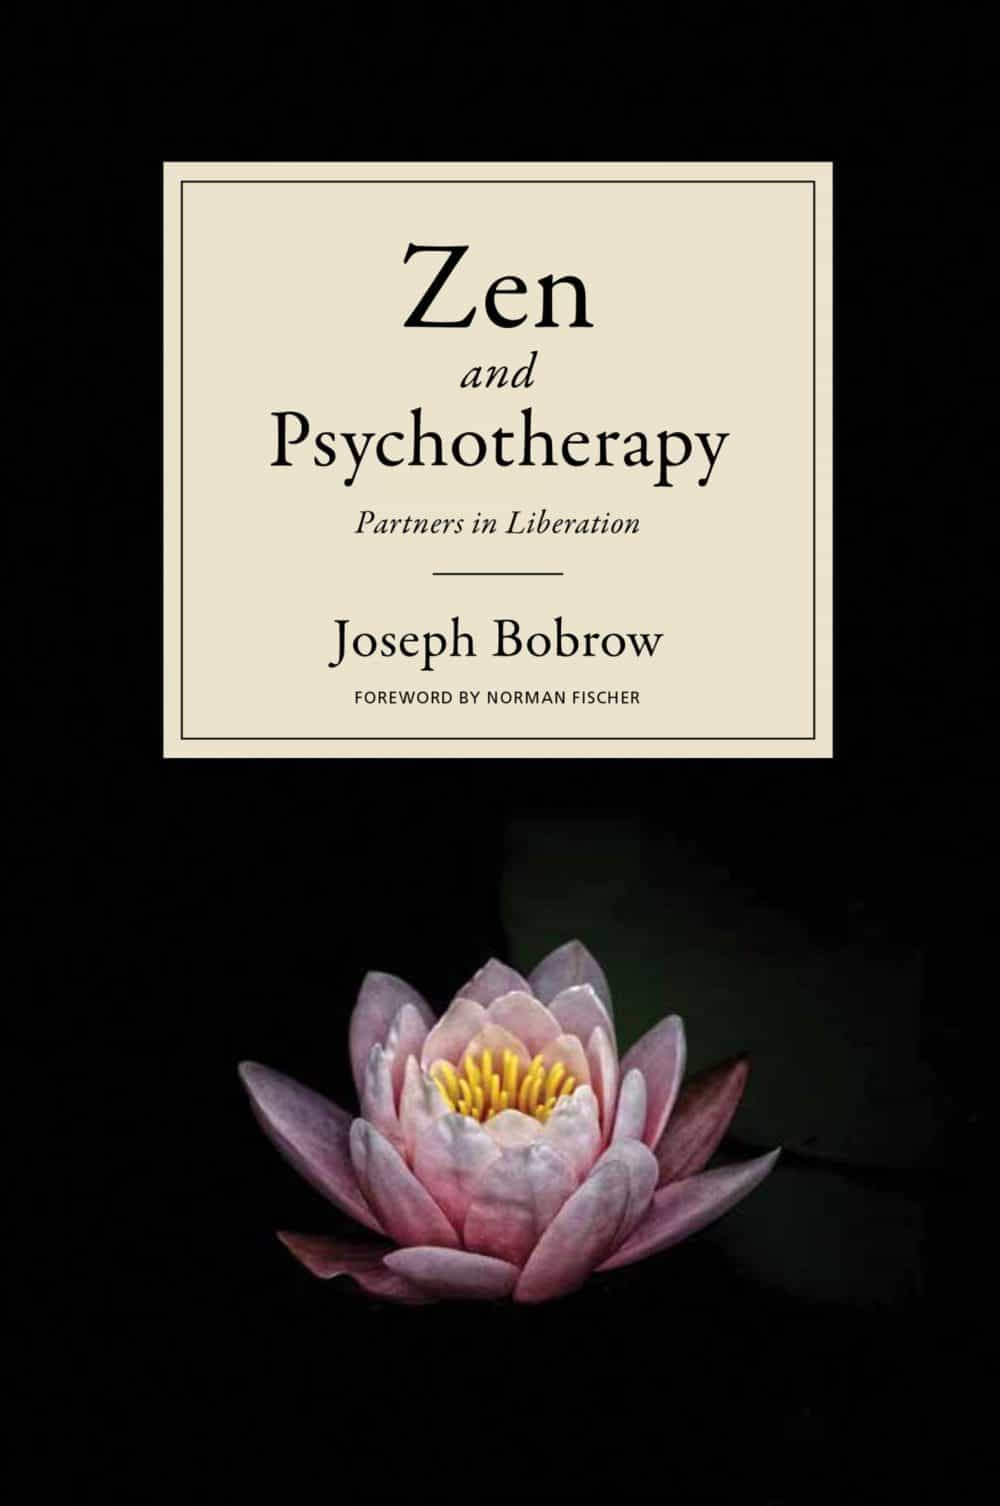 Zen and Psychotheraphy - Author Joseph Bobrow